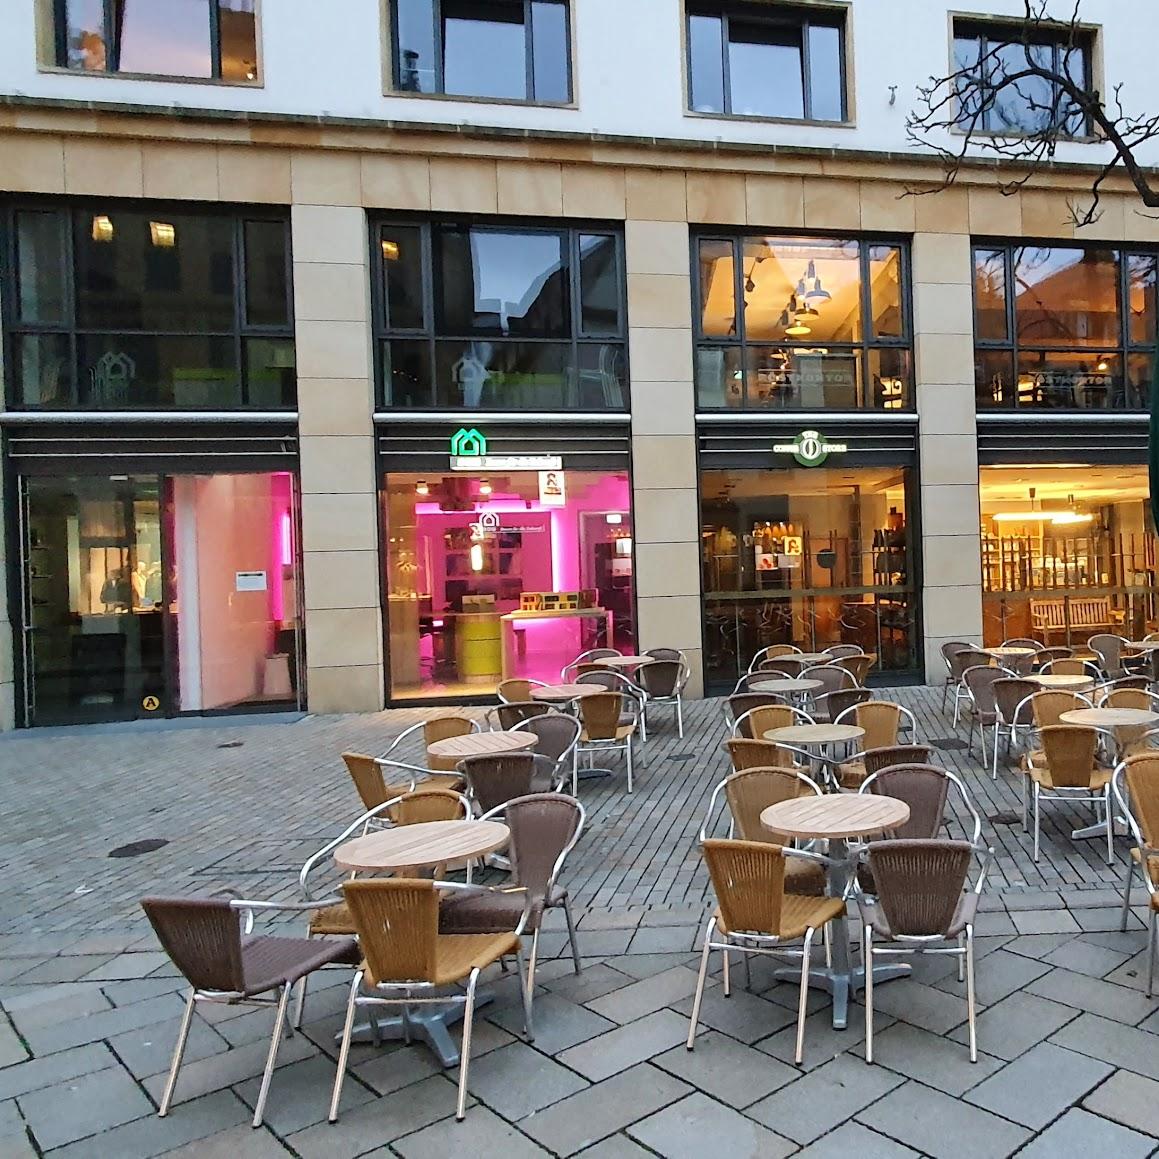 Restaurant "The Coffee Store" in Bielefeld